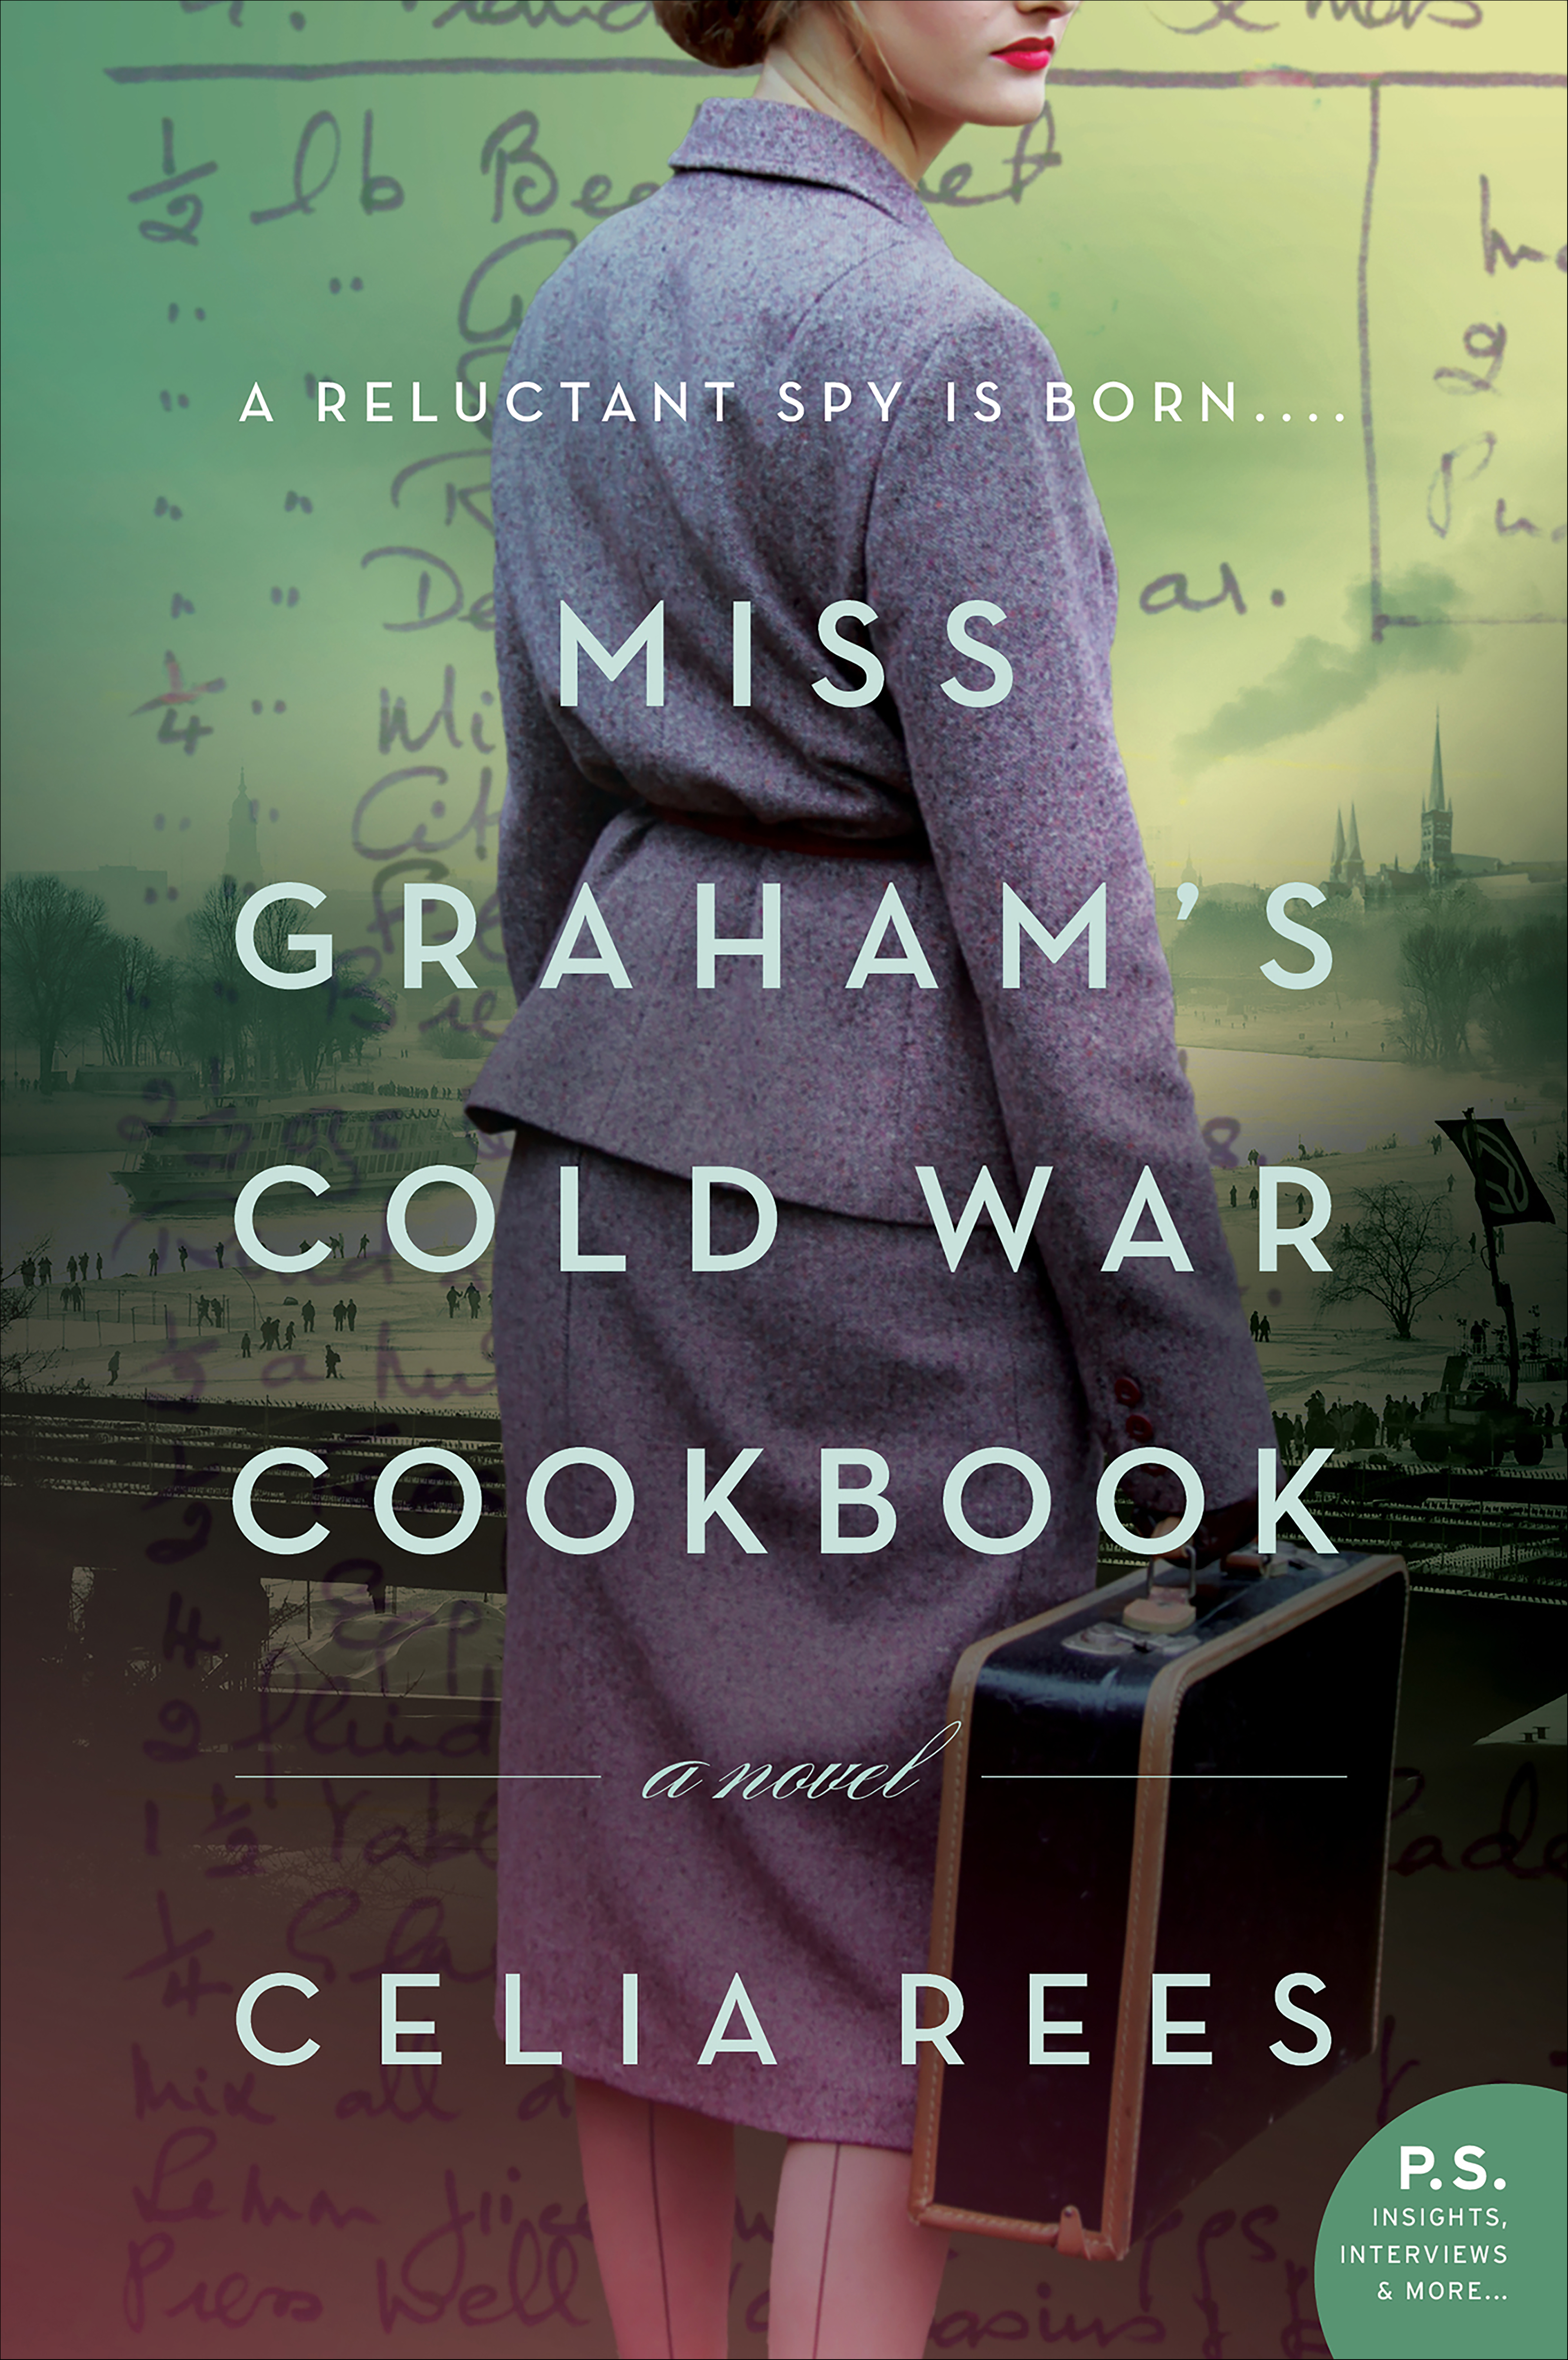 Miss Graham's Cold War Cookbook cover image